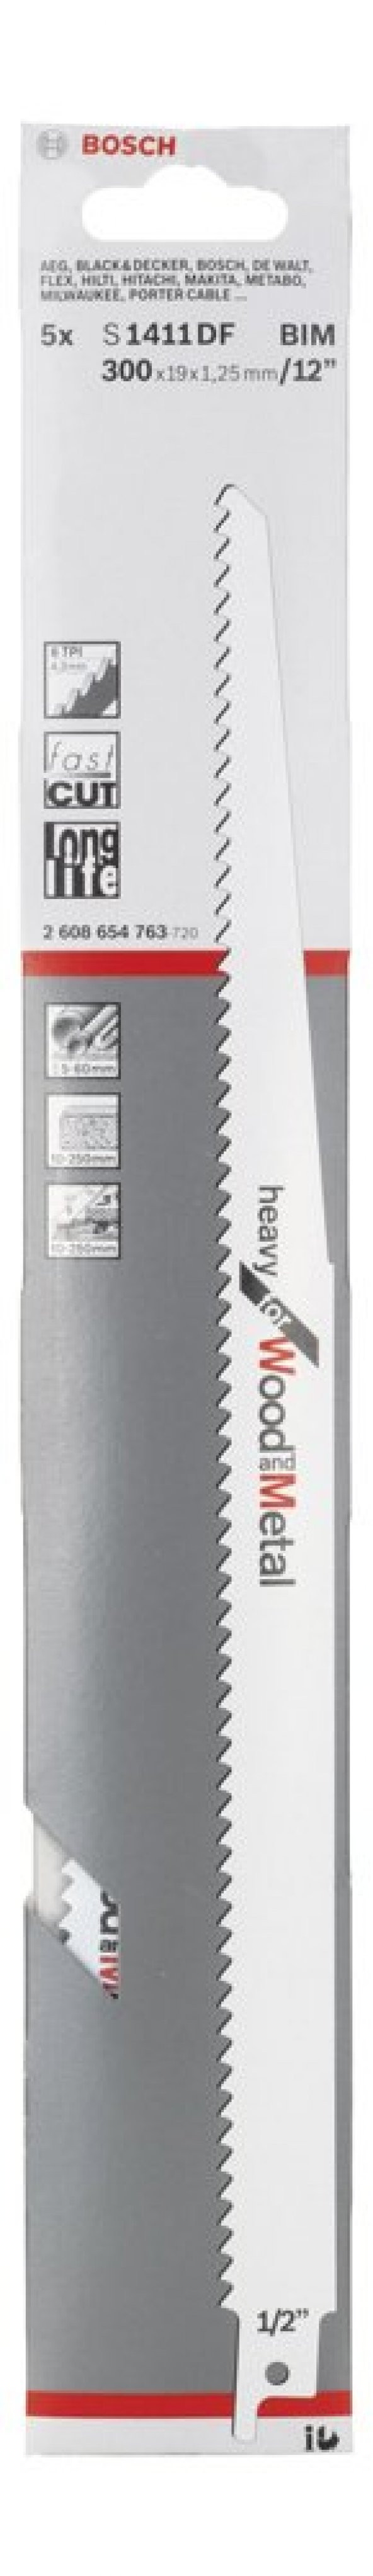 Bosch - Heavy Serisi Ahşap Ve Metal için Panter Testere Bıçağı S 1411 DF - 5li